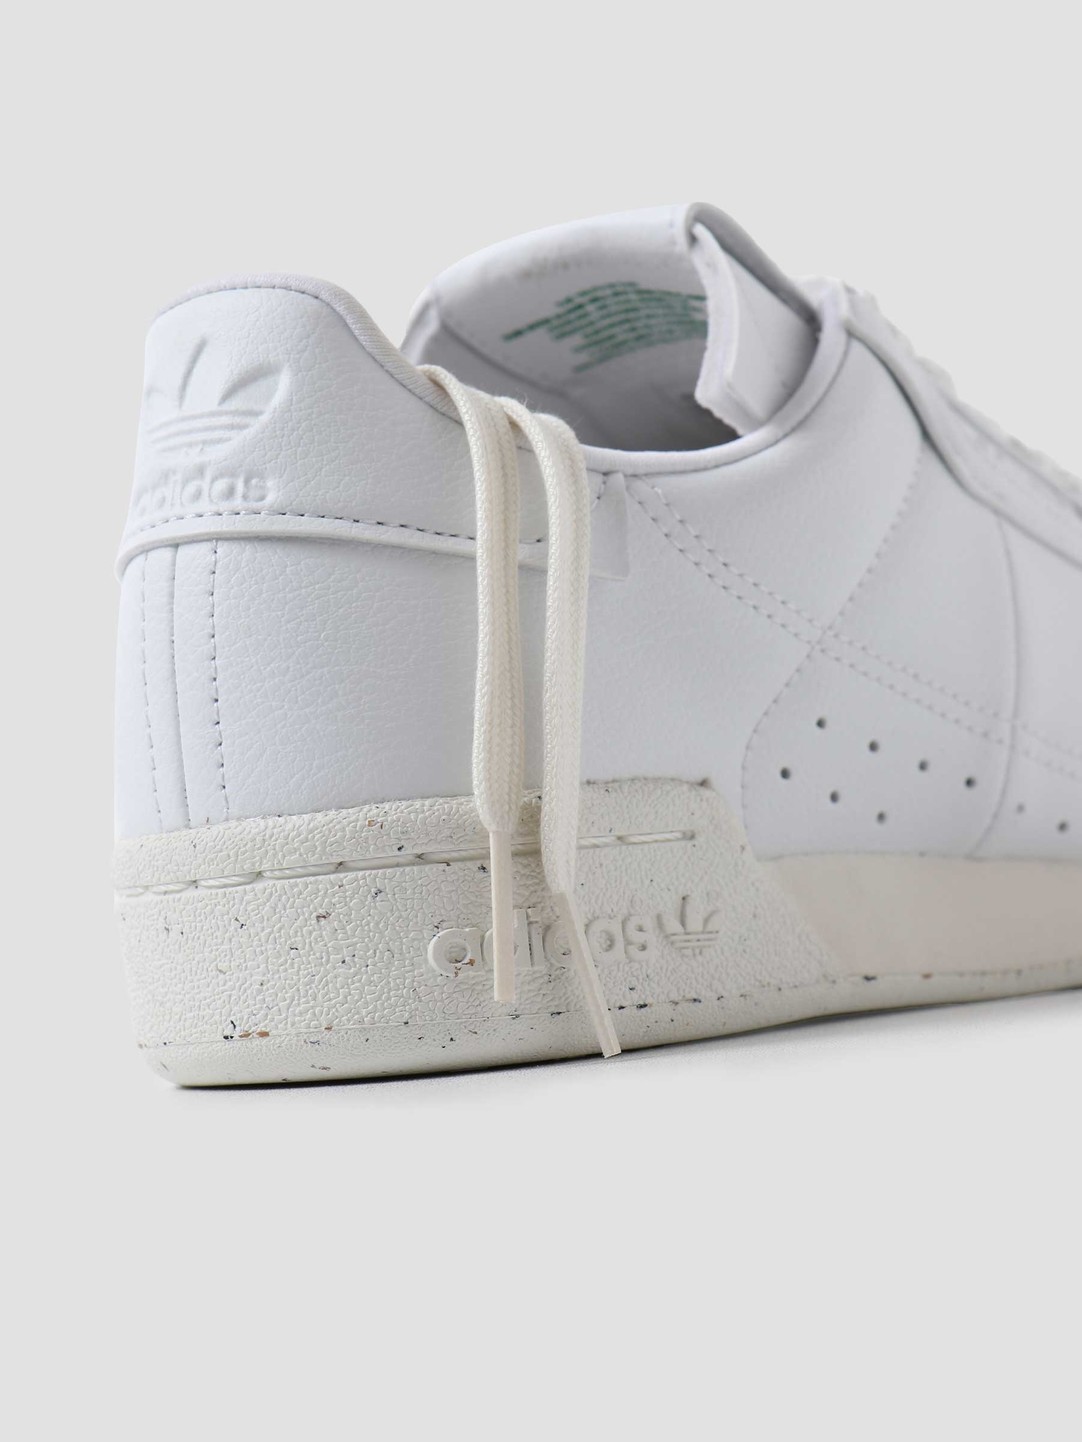 Adidas U Continental 80 Footwear White Off White Green Fv8468 Freshcotton